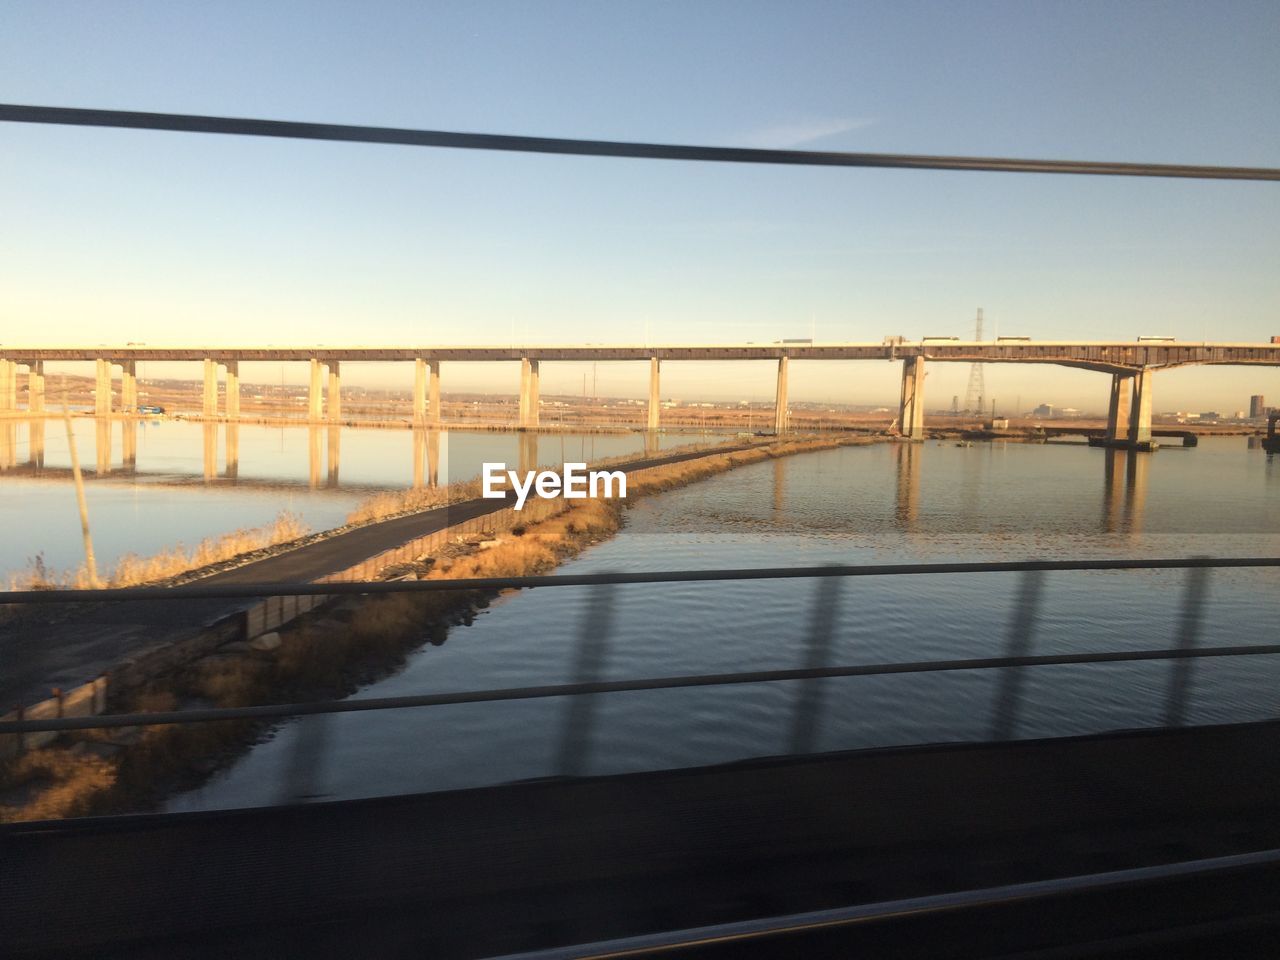 Bridge over river seen through moving train against sky